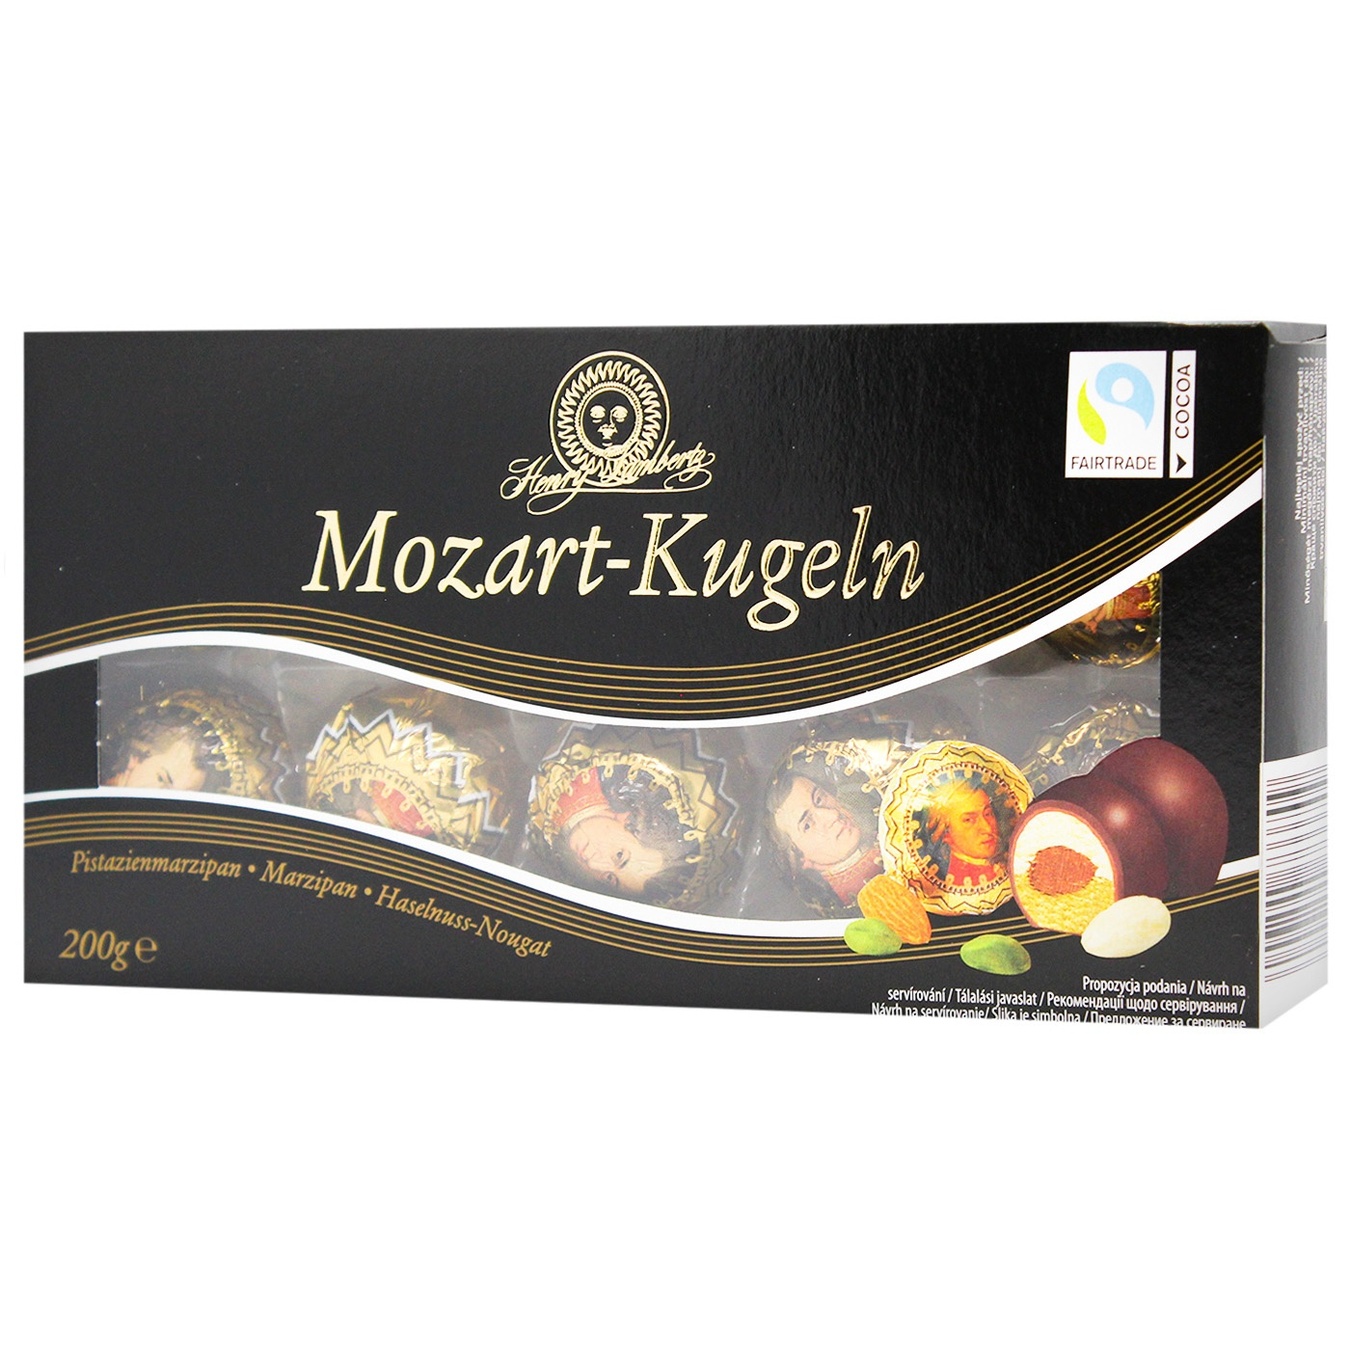 Chocolate candies Lambertz Mozart Kugeln 200g